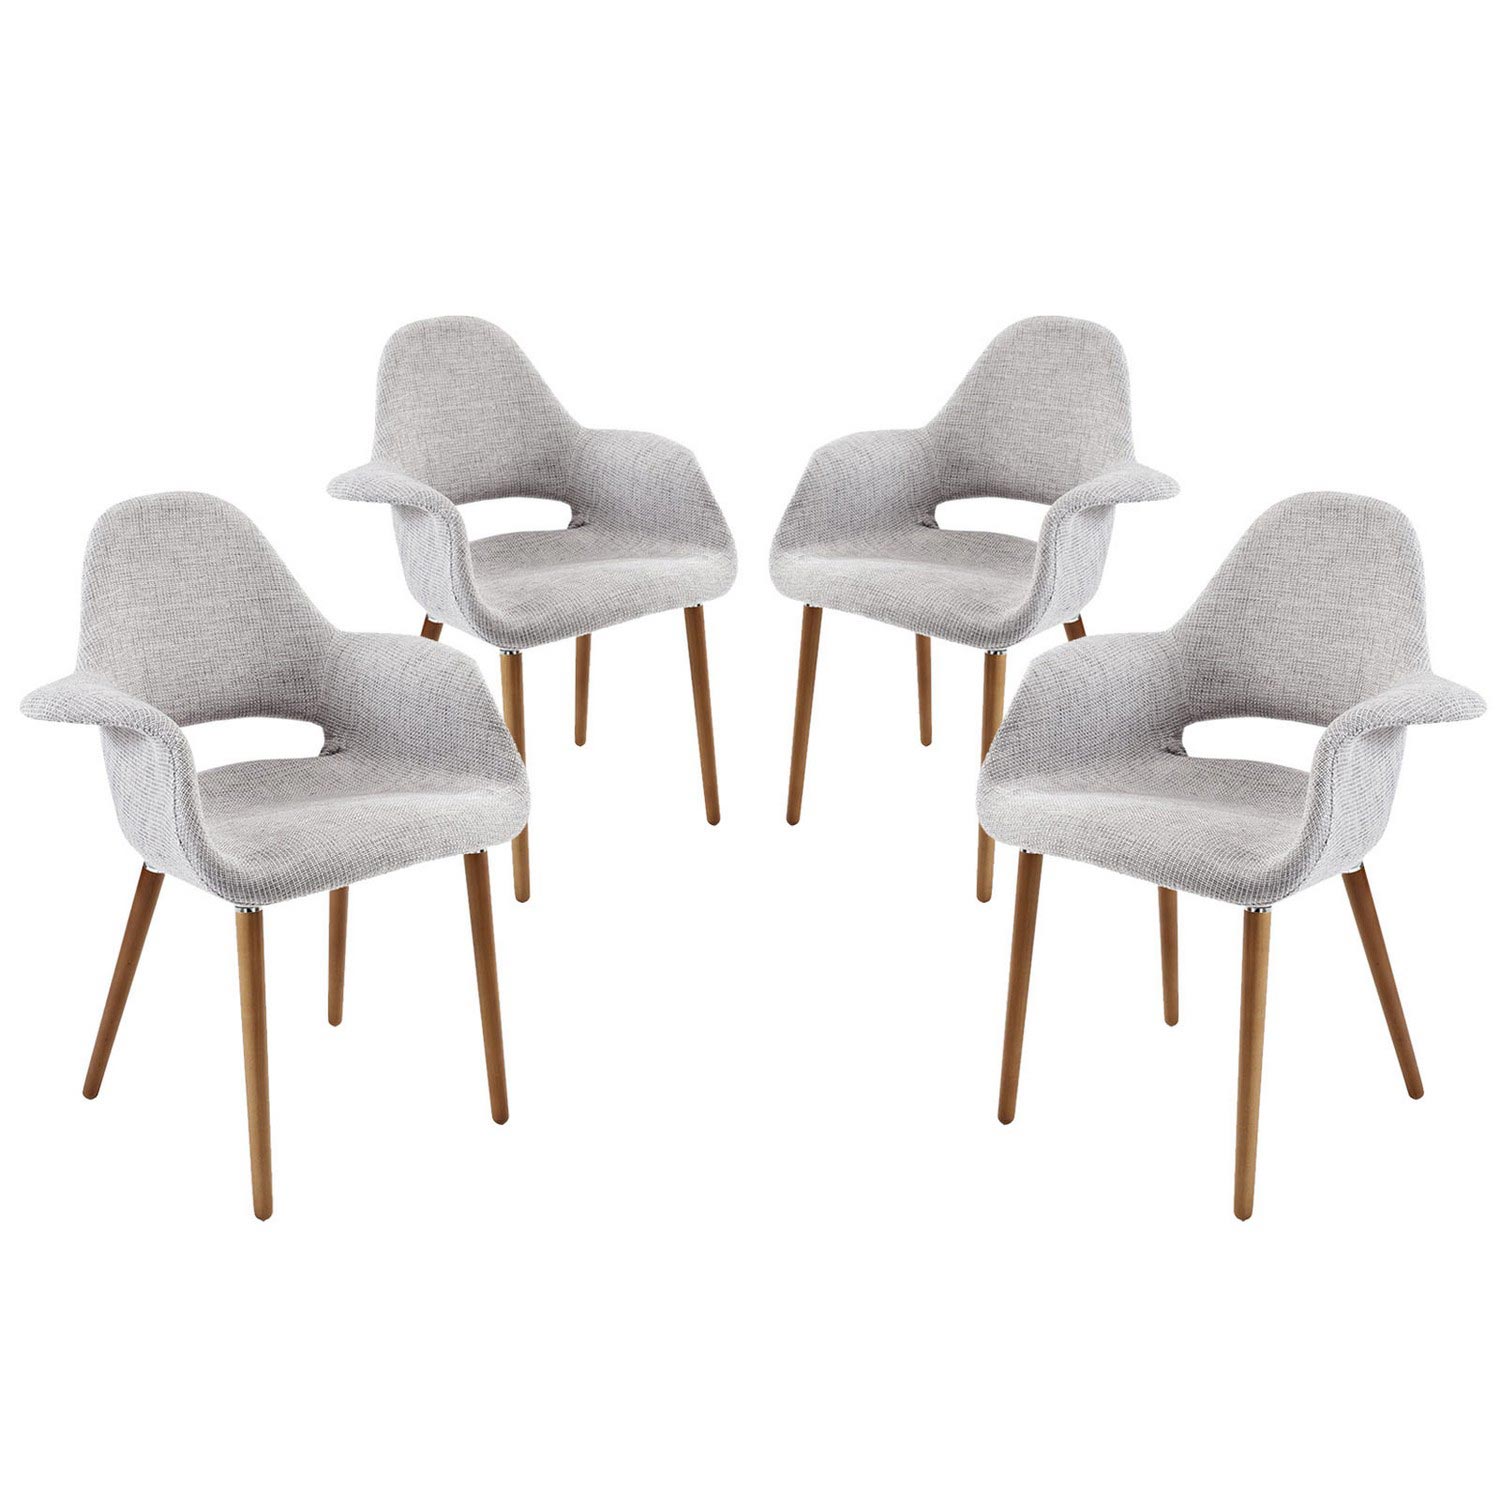 Modway Aegis Dining Armchair Set of 4 - Light Gray